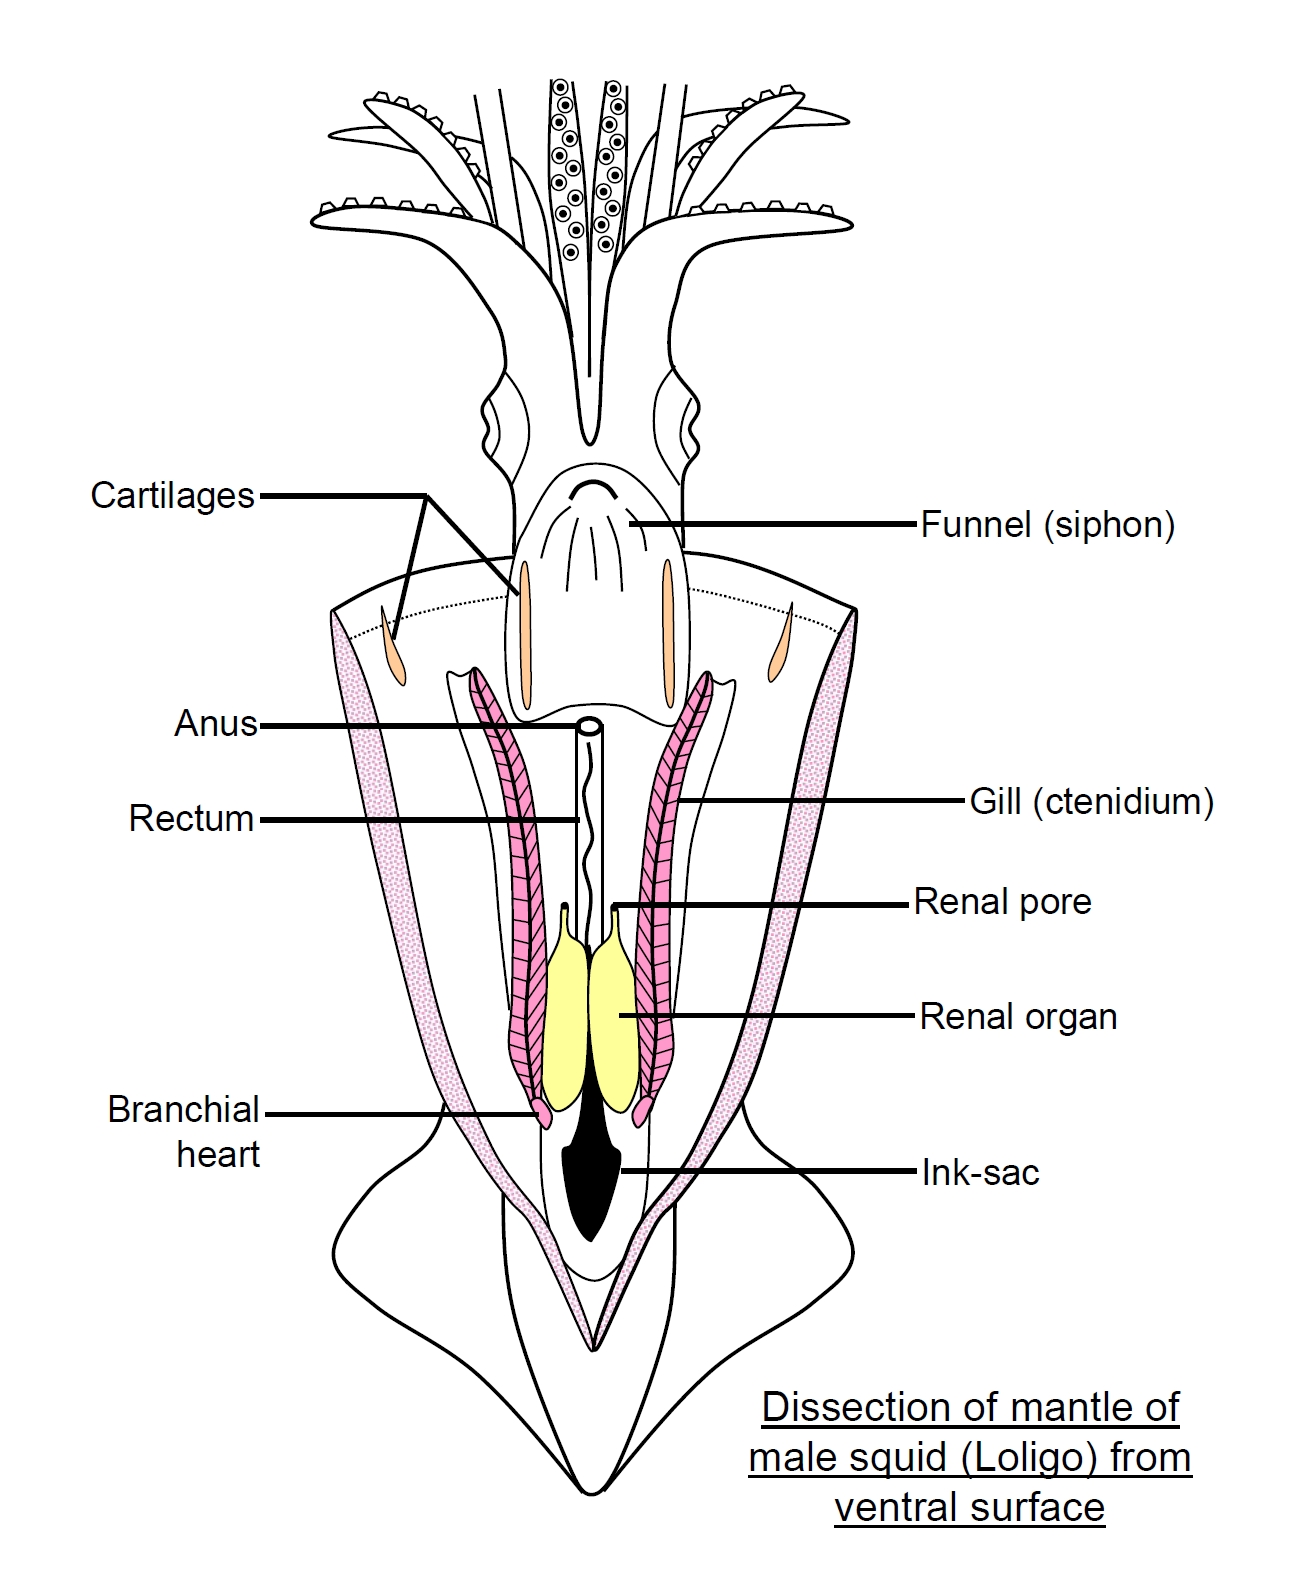 squid internal anatomy diagram